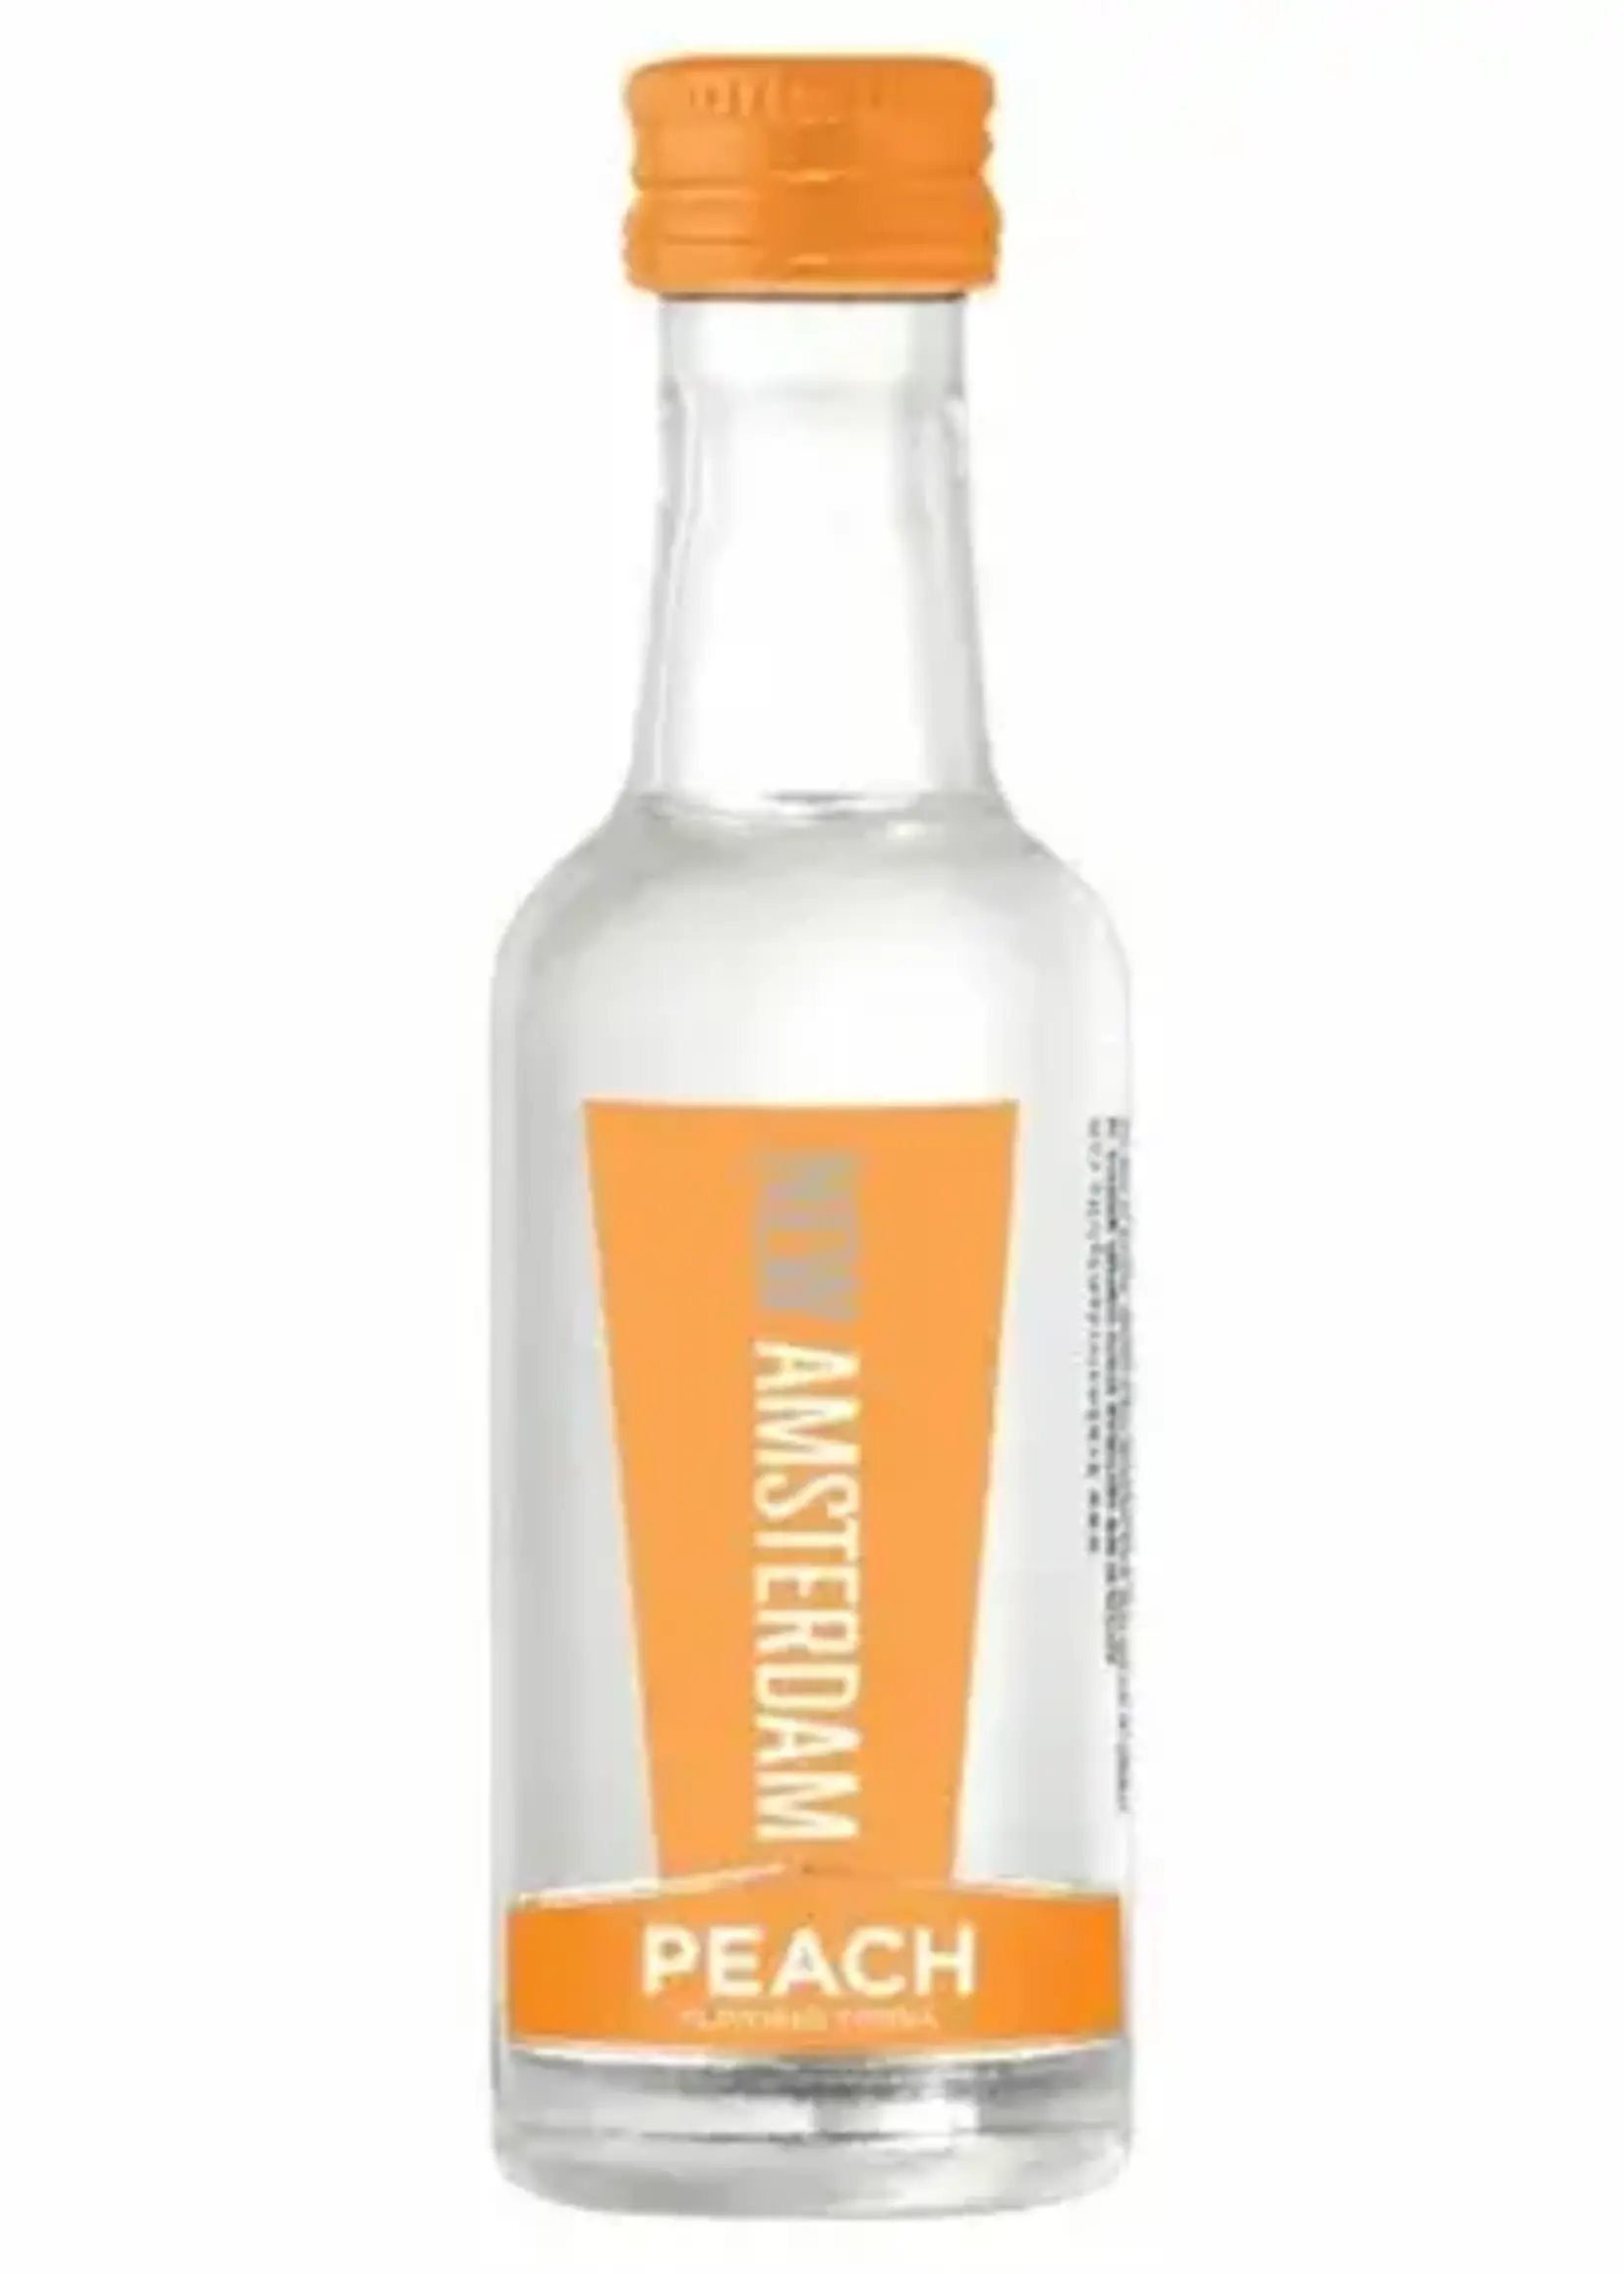 vodka New Amsterdam Peach 50ml